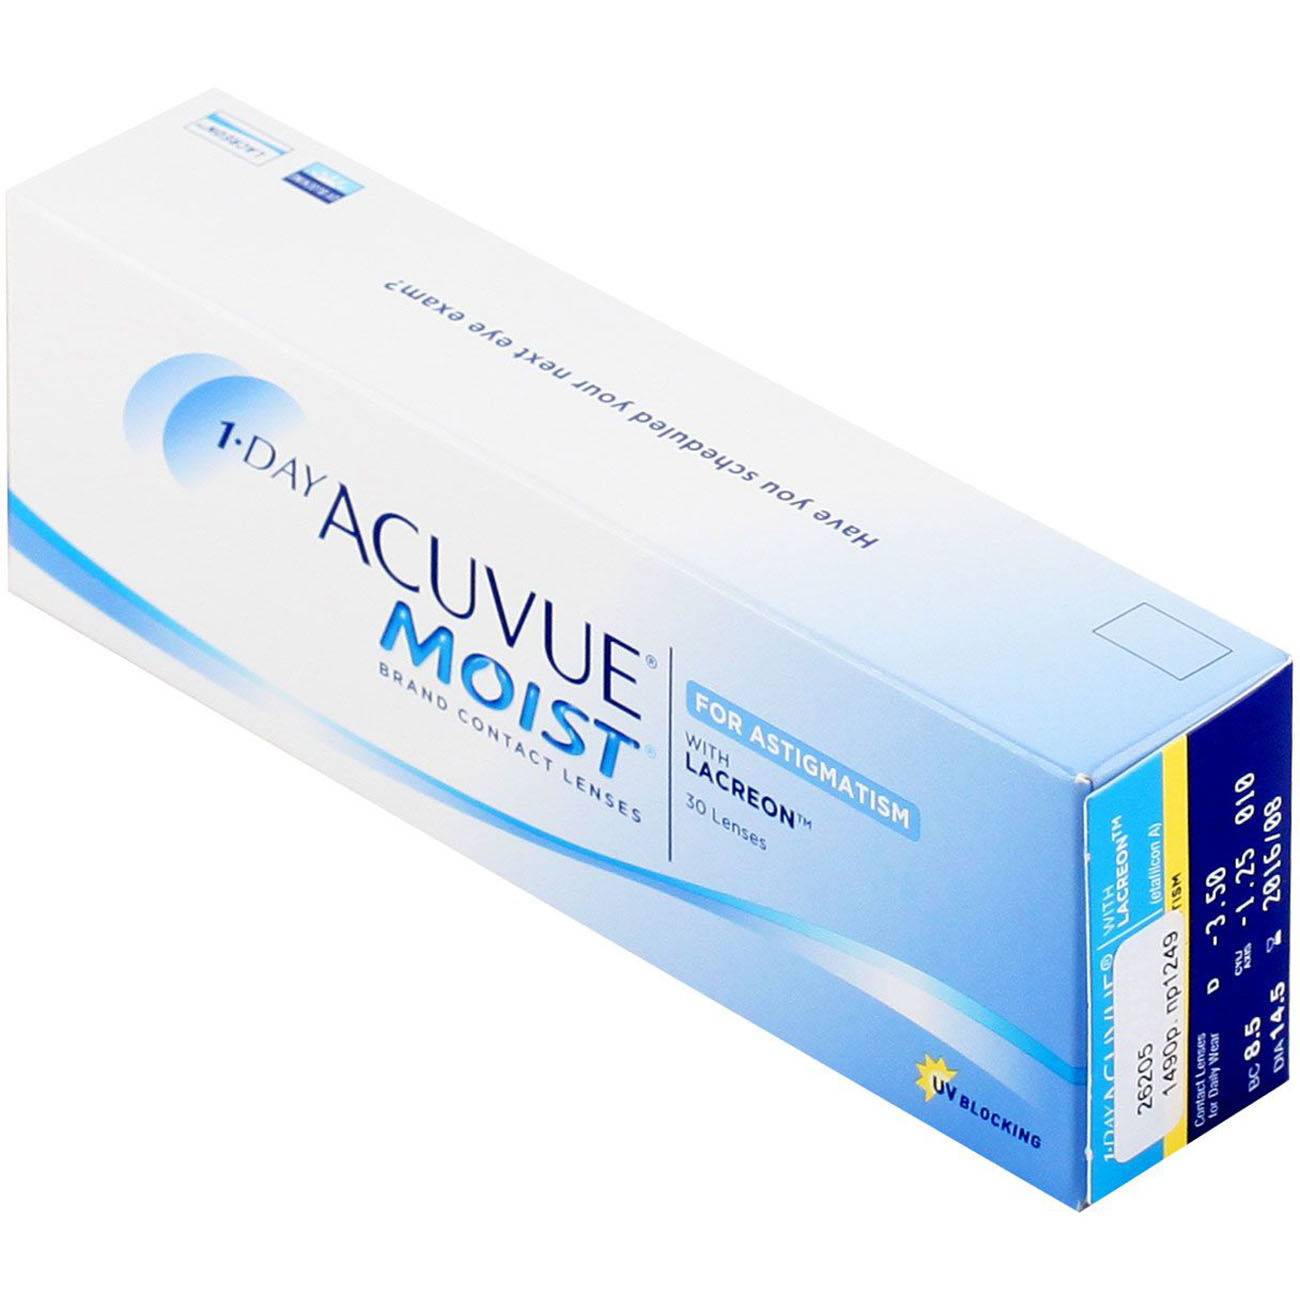 Линзы acuvue 1-day acuvue moist. описание, особенности применения - druggist.ru